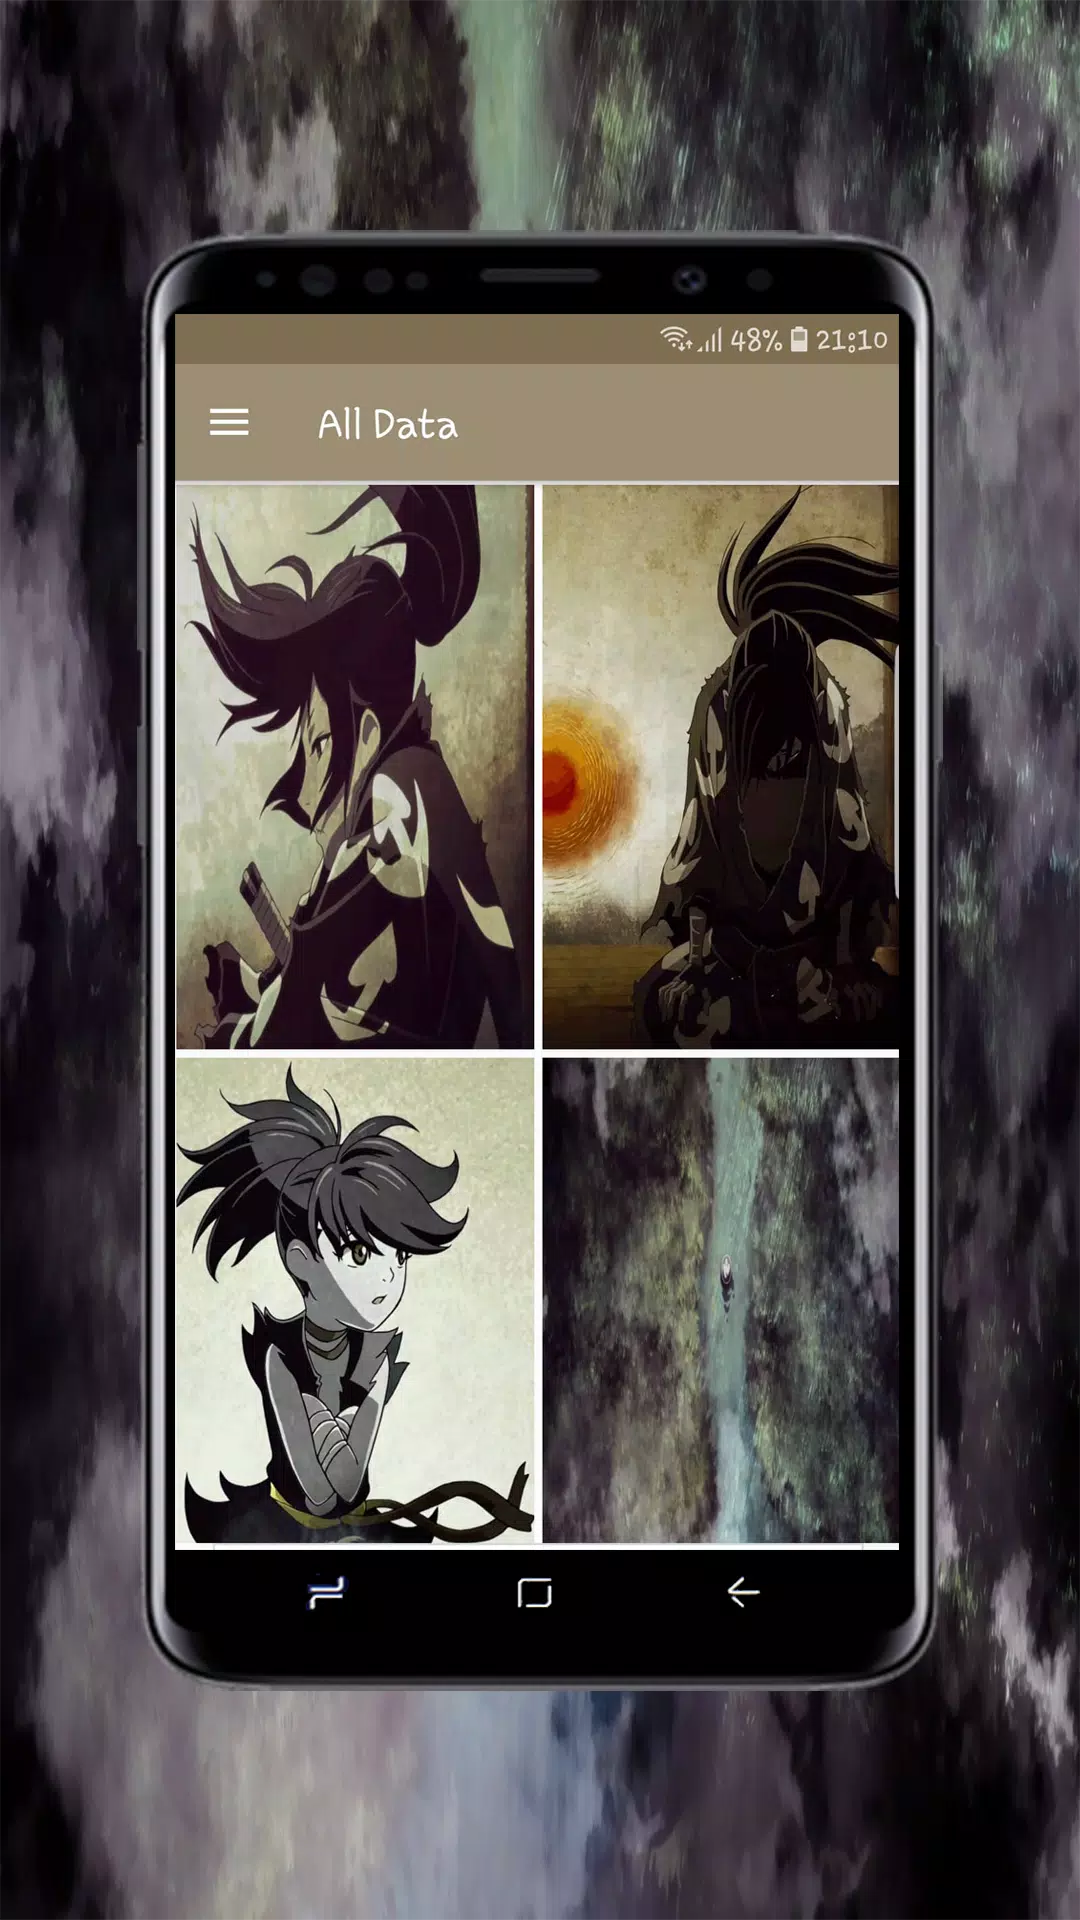 Anime Dororo HD Wallpaper